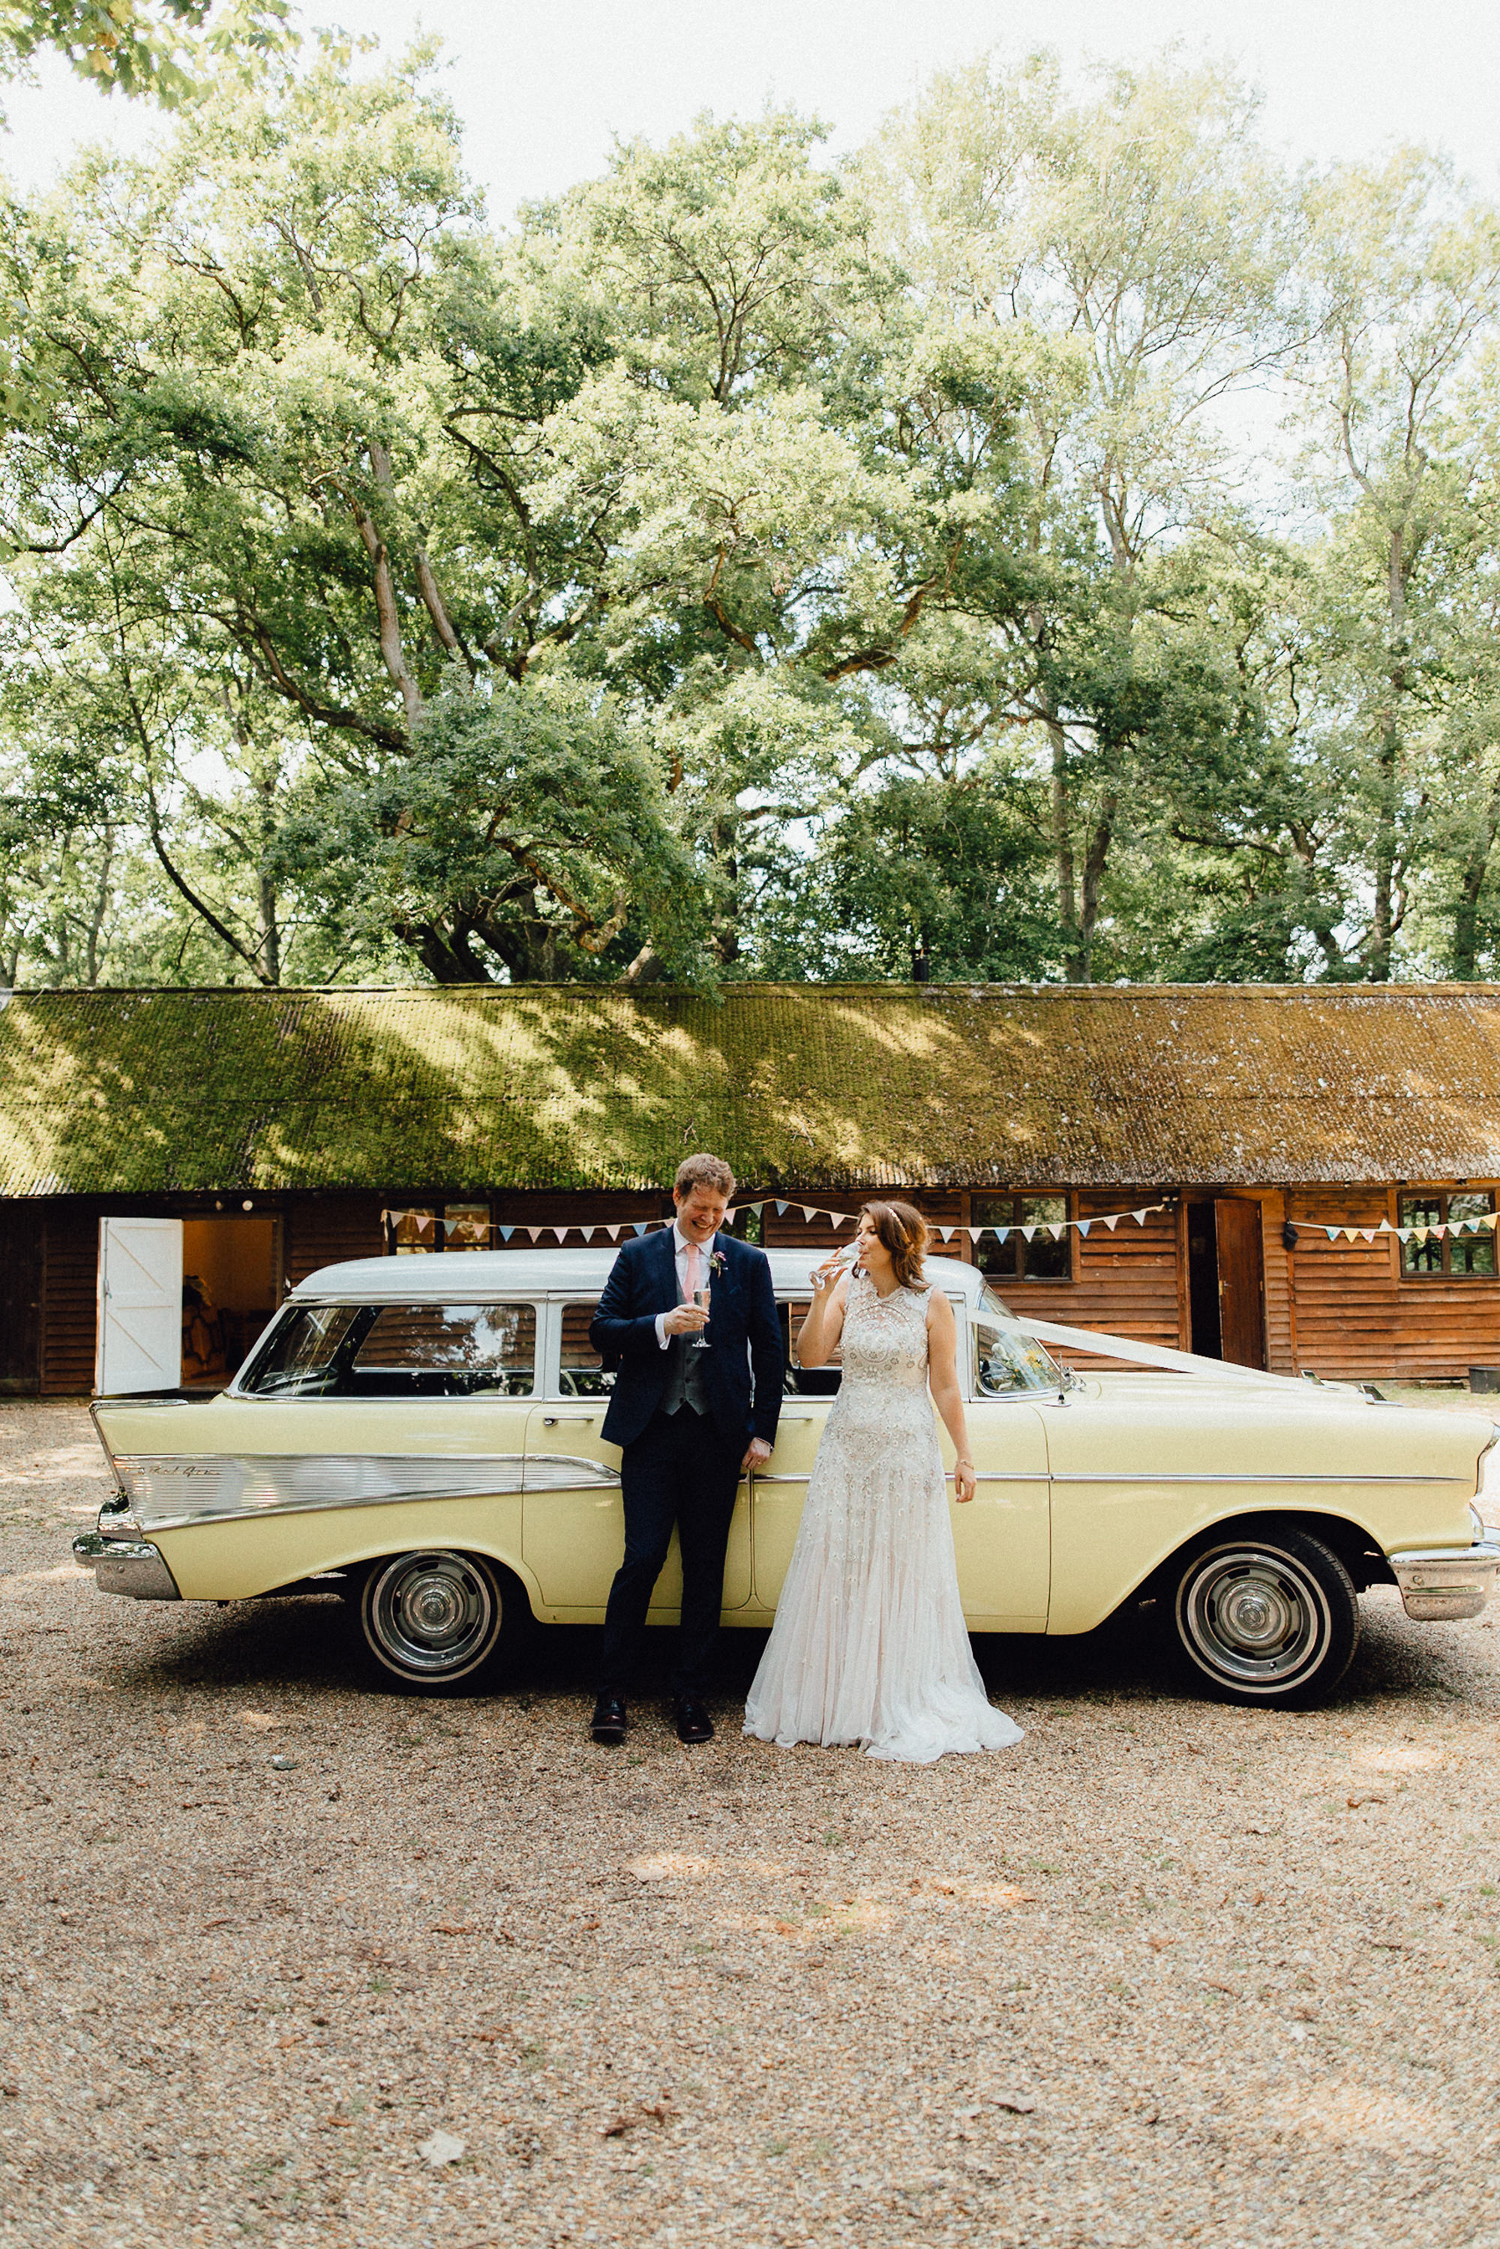 45 Newlywed bride in a Needle Thread dress by pale yellow retro chevrolet wedding car